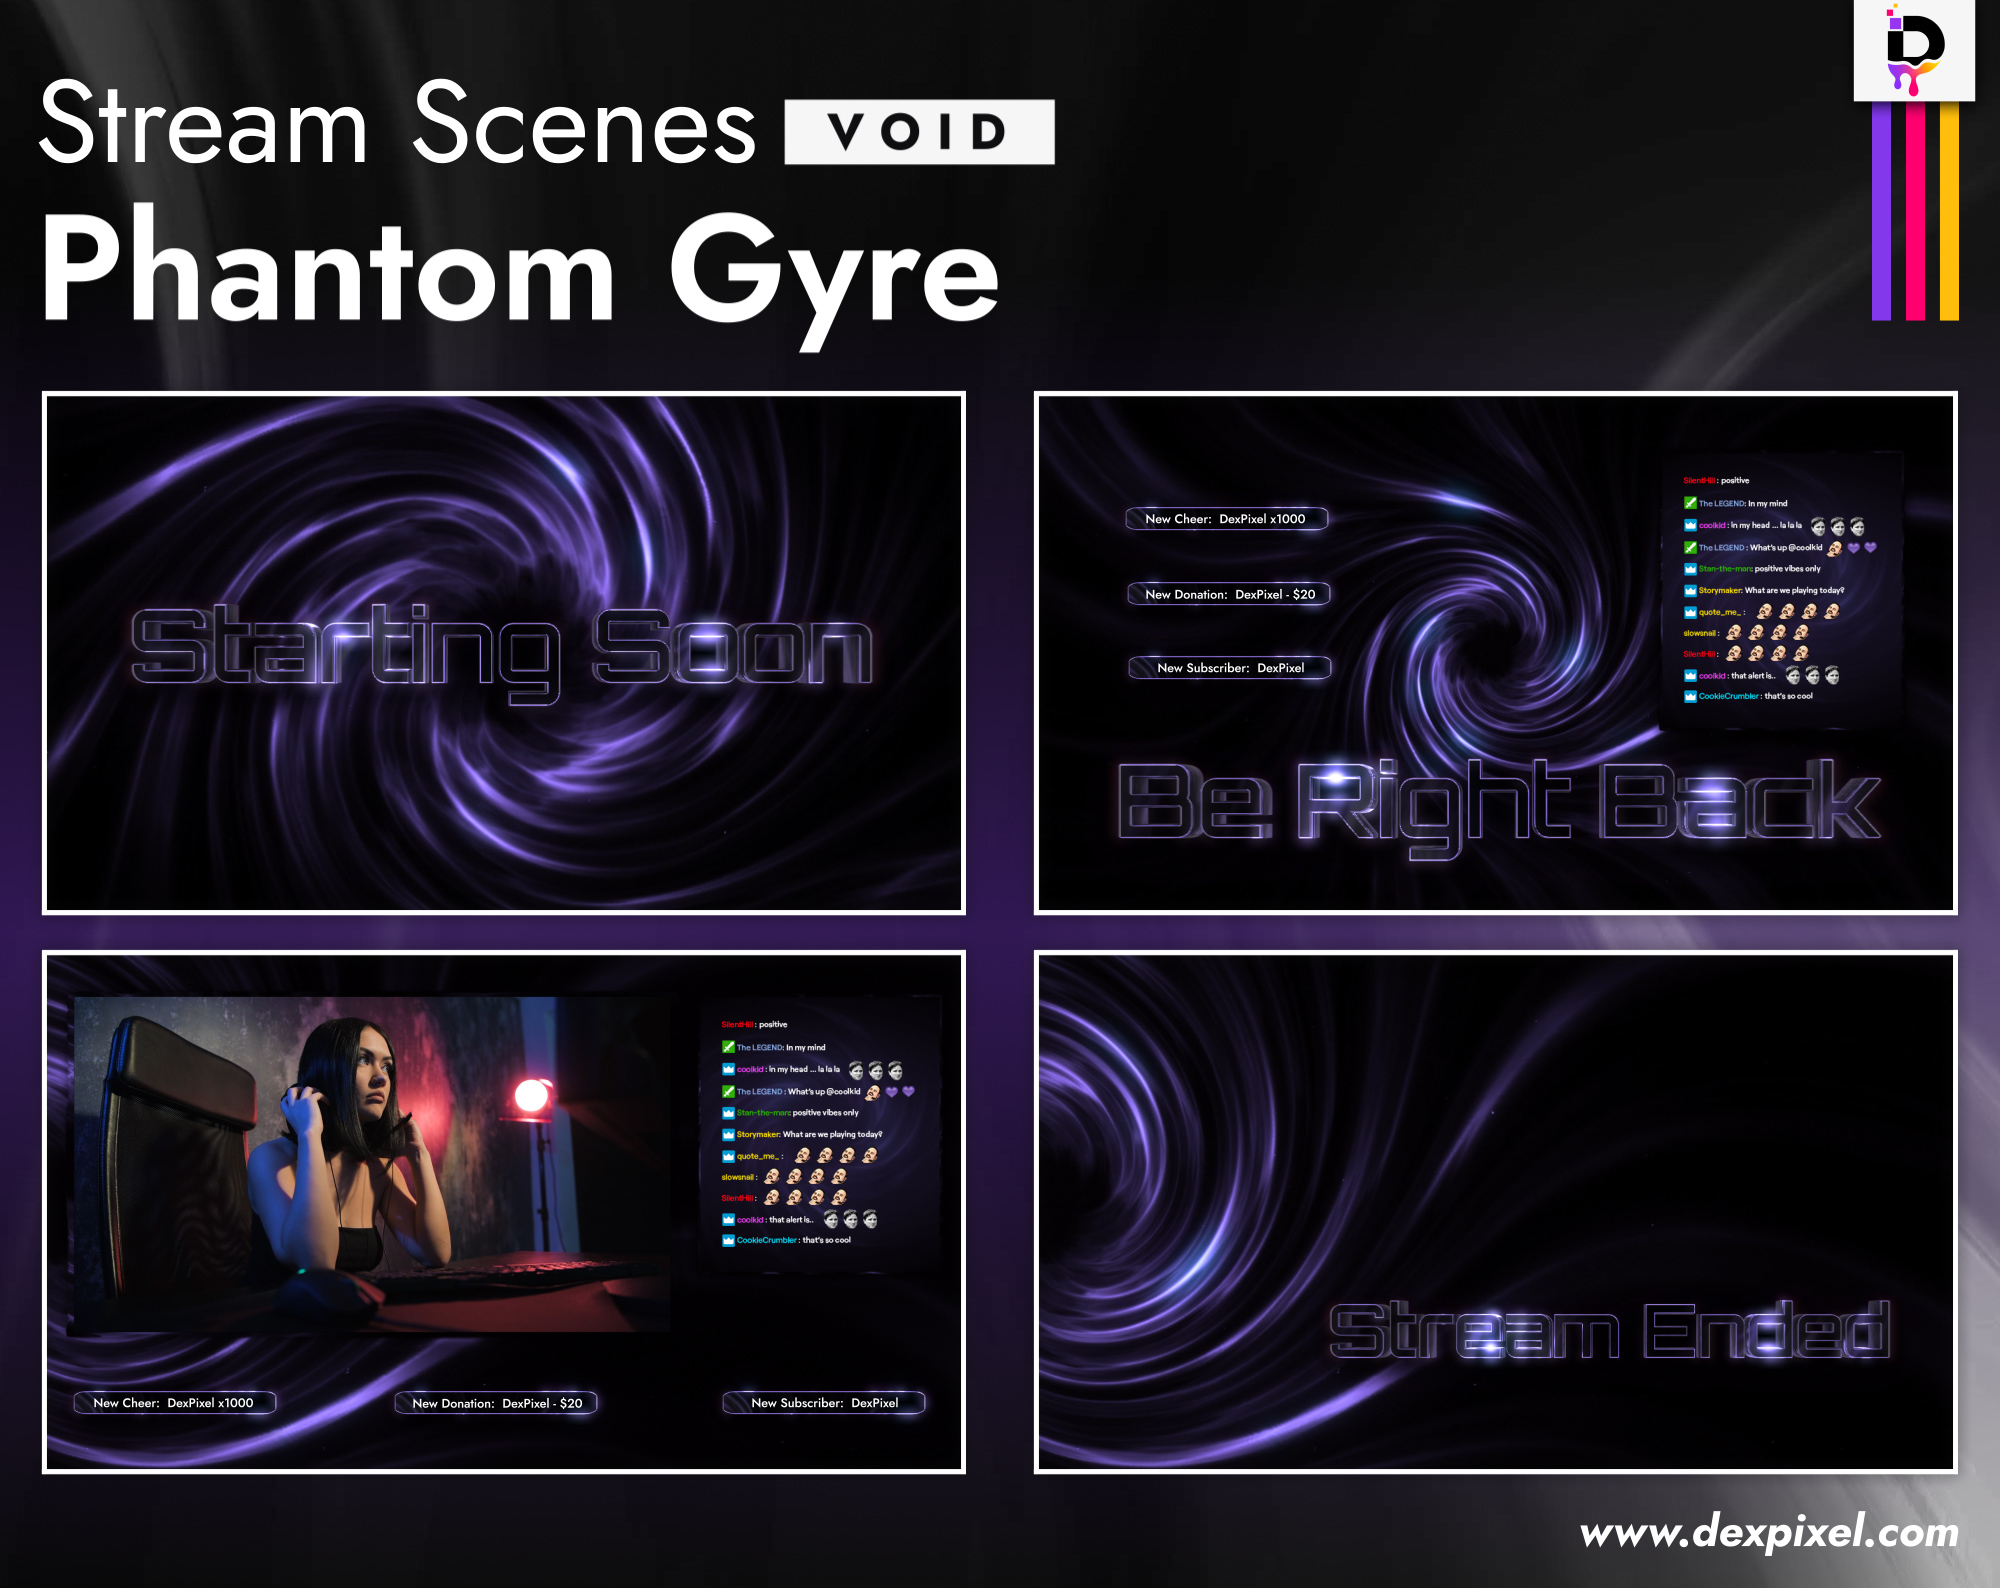 Stream Scenes Dexpixel Thumbnail Phantom Gyre Void